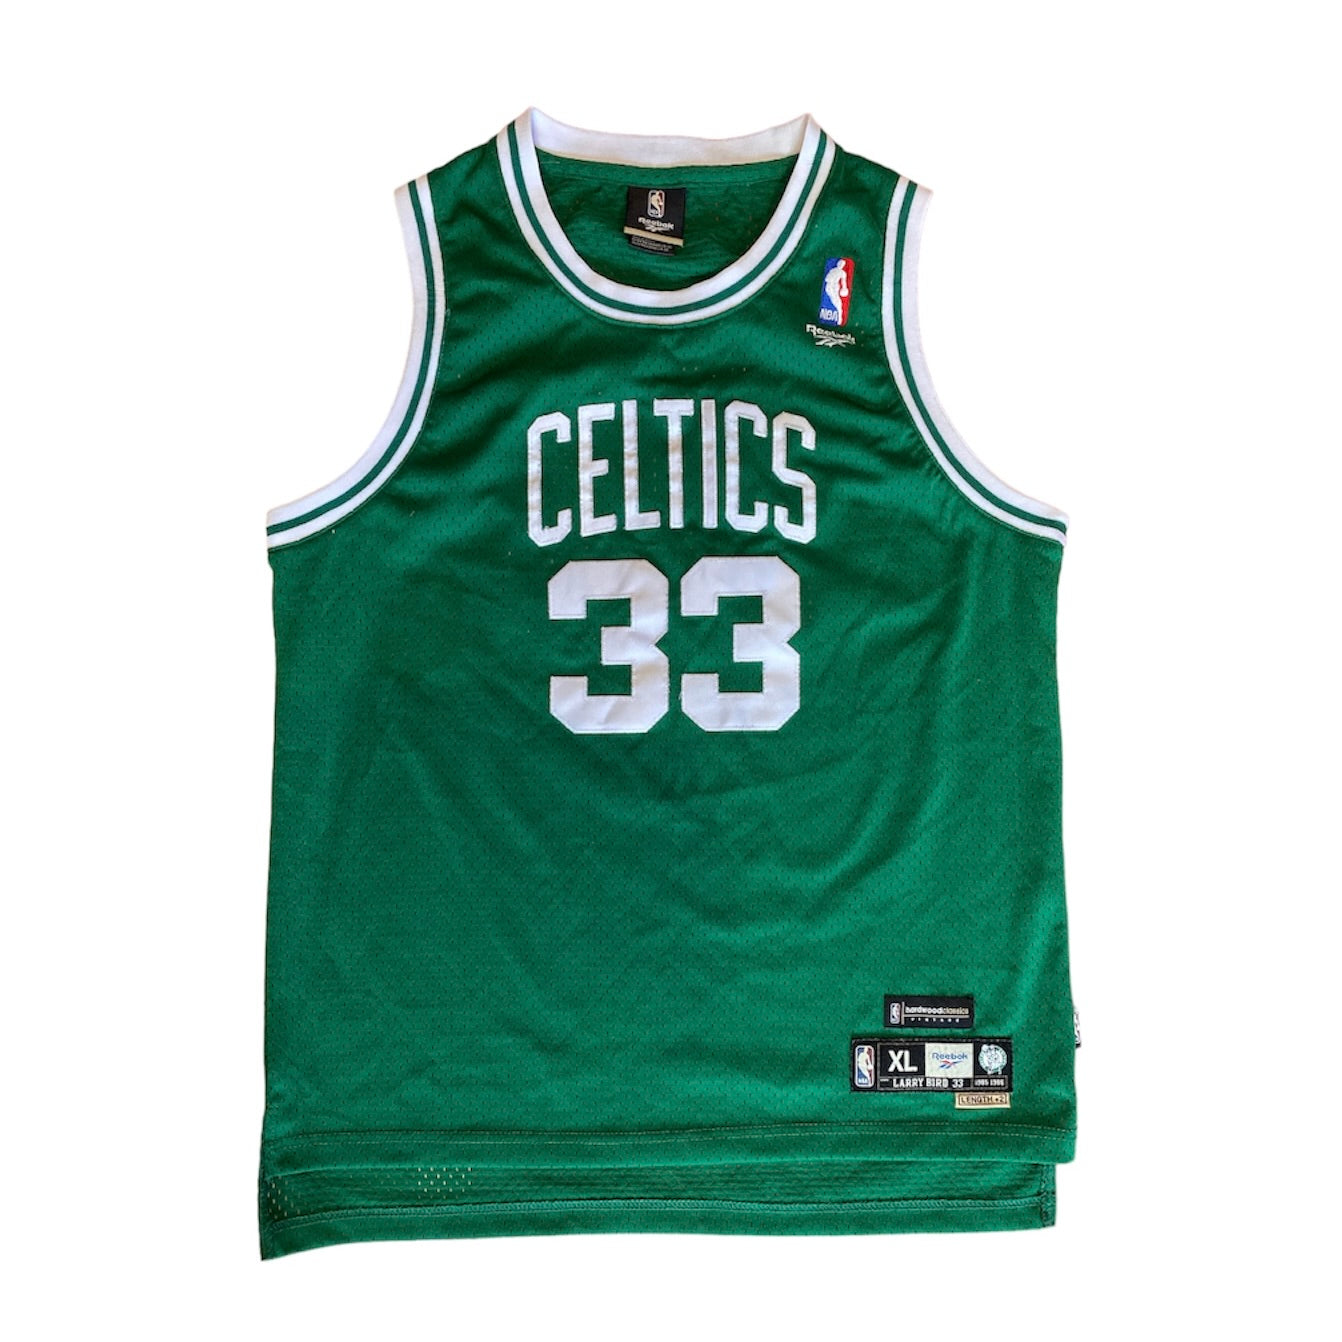 Reebok Boston Celtics Hardwood Classics Larry Bird Basketball Jersey Youth